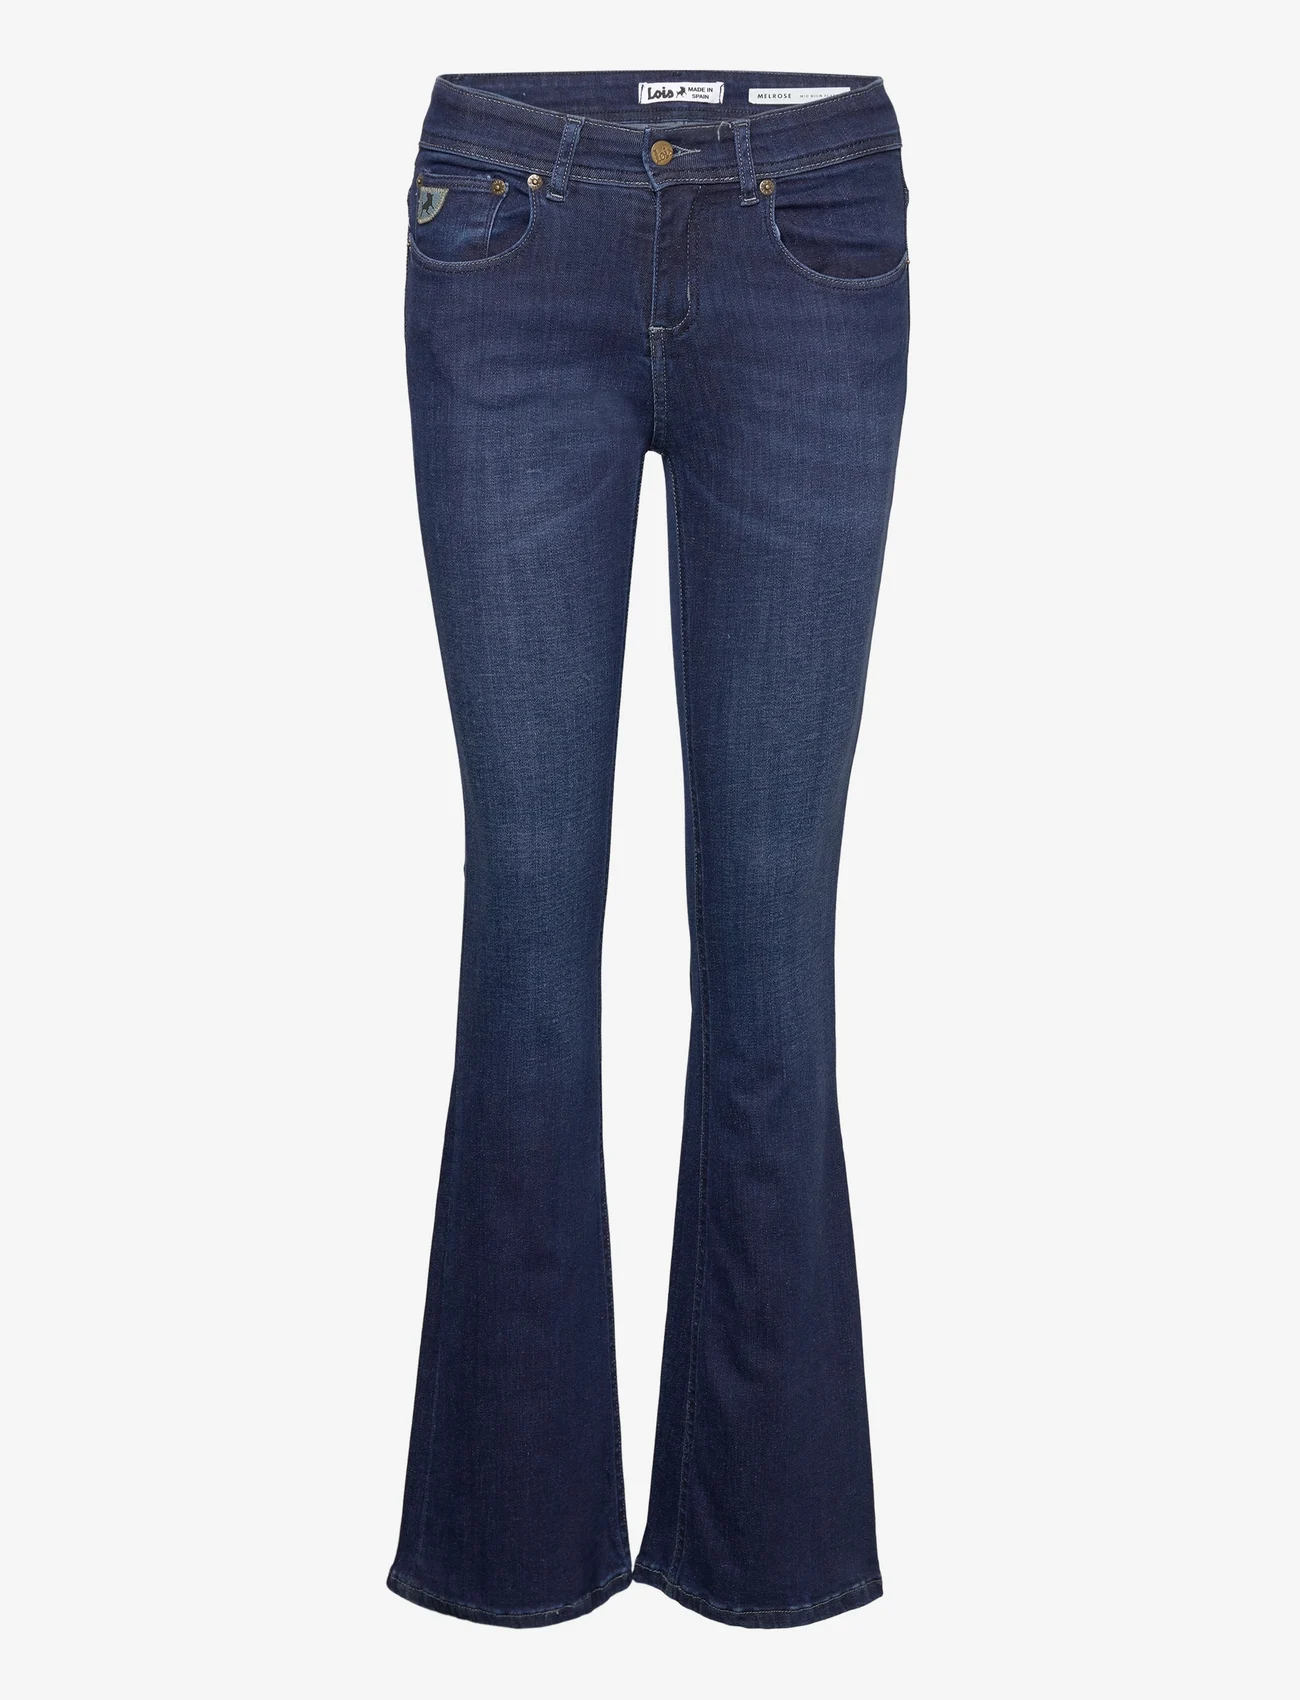 Lois Jeans - Melrose 5707 Marconi Mist - flared jeans - dark blue - 0